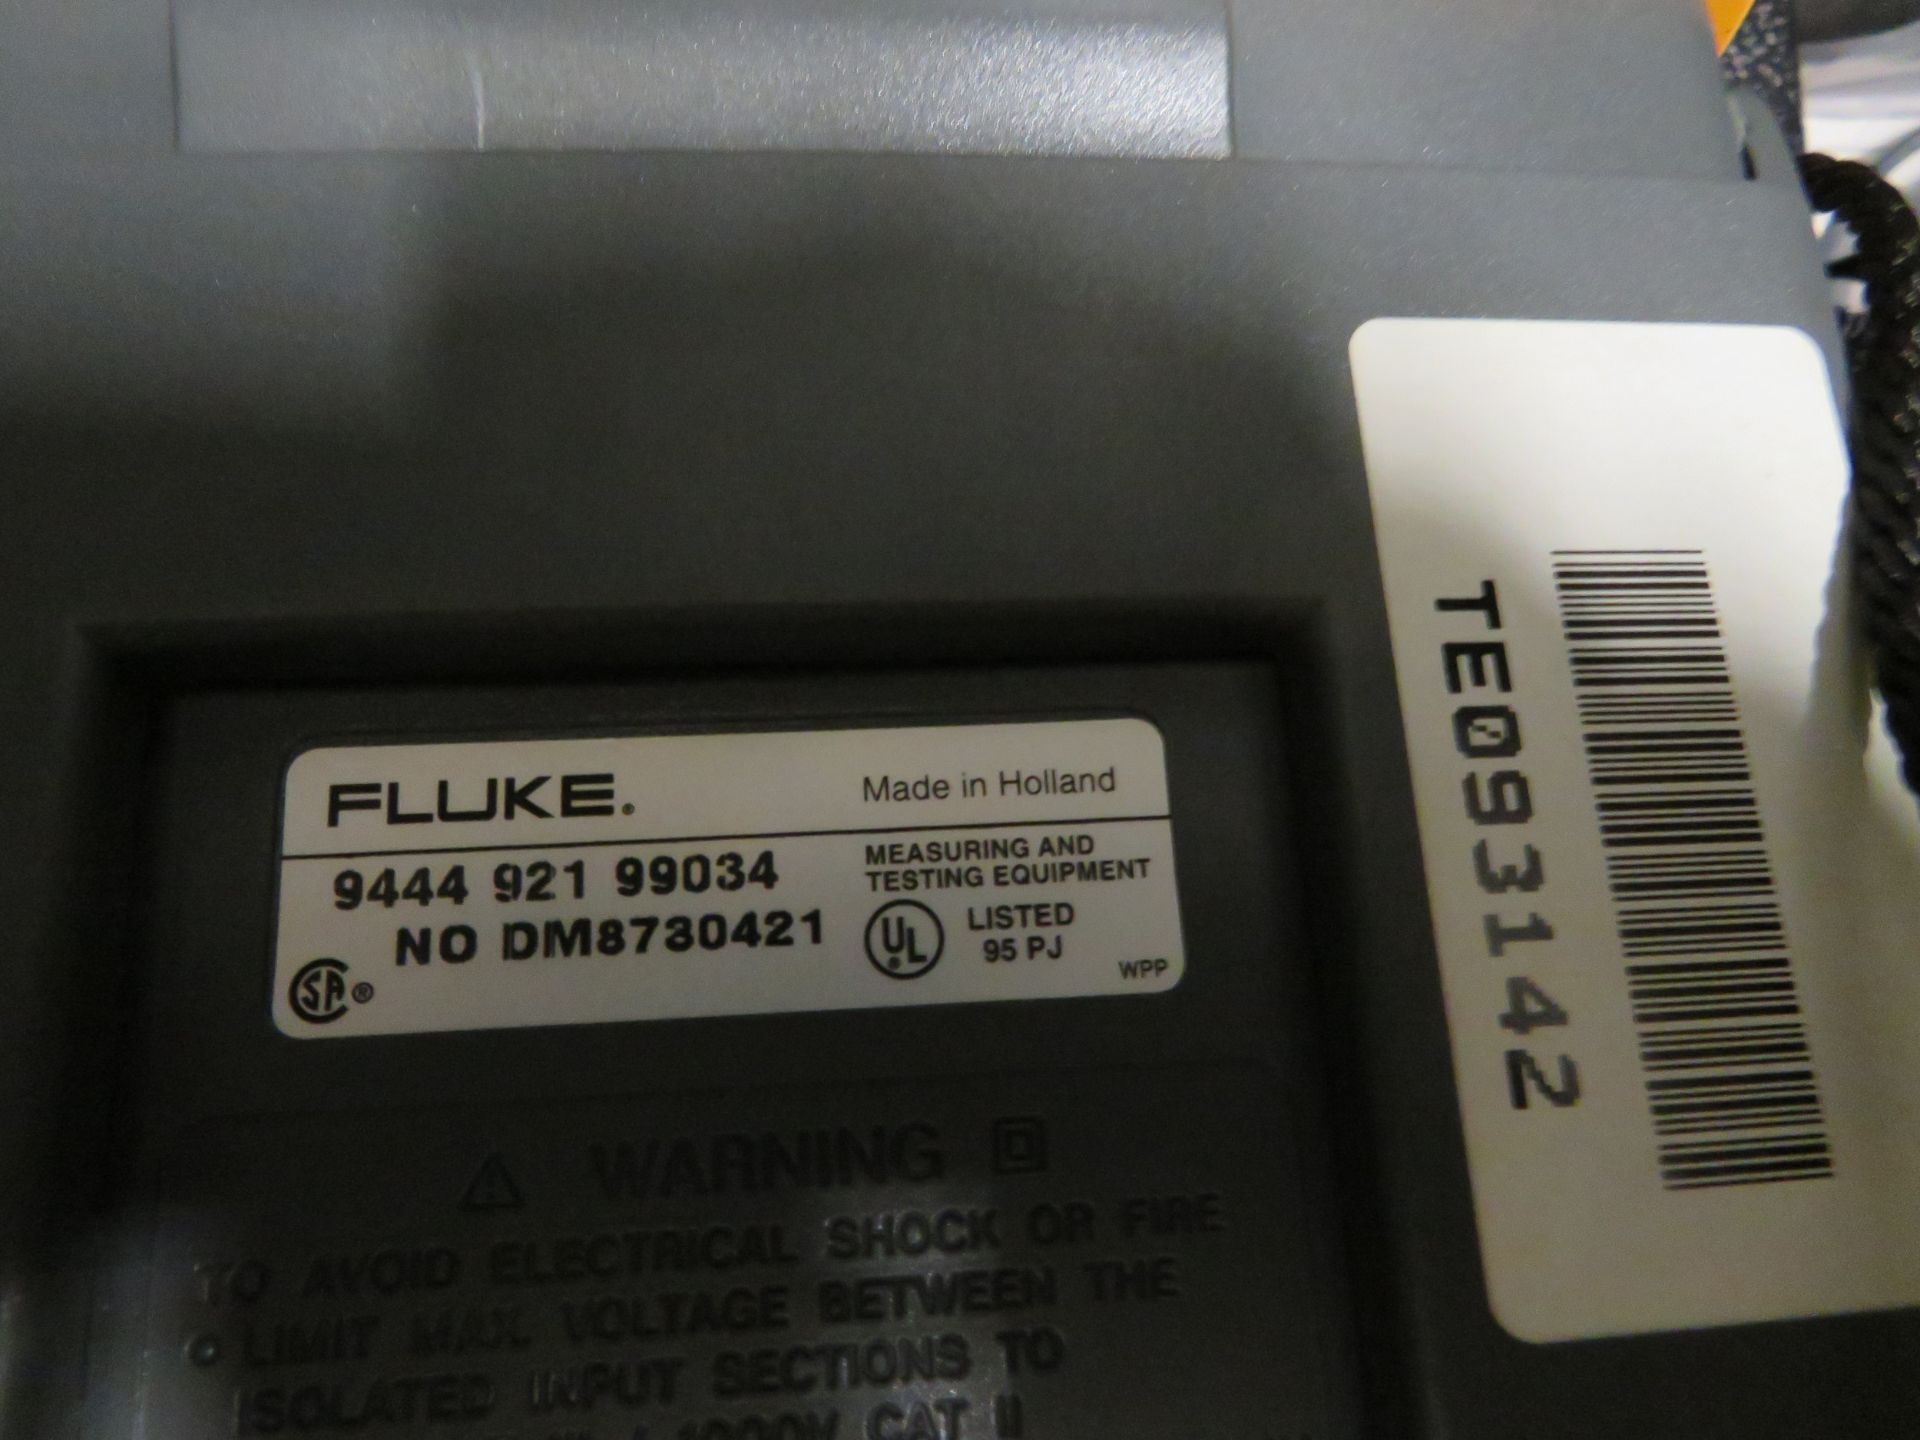 Fluke Scopemeter 199C Color 200MHz - 2.5GS/s - Image 3 of 4